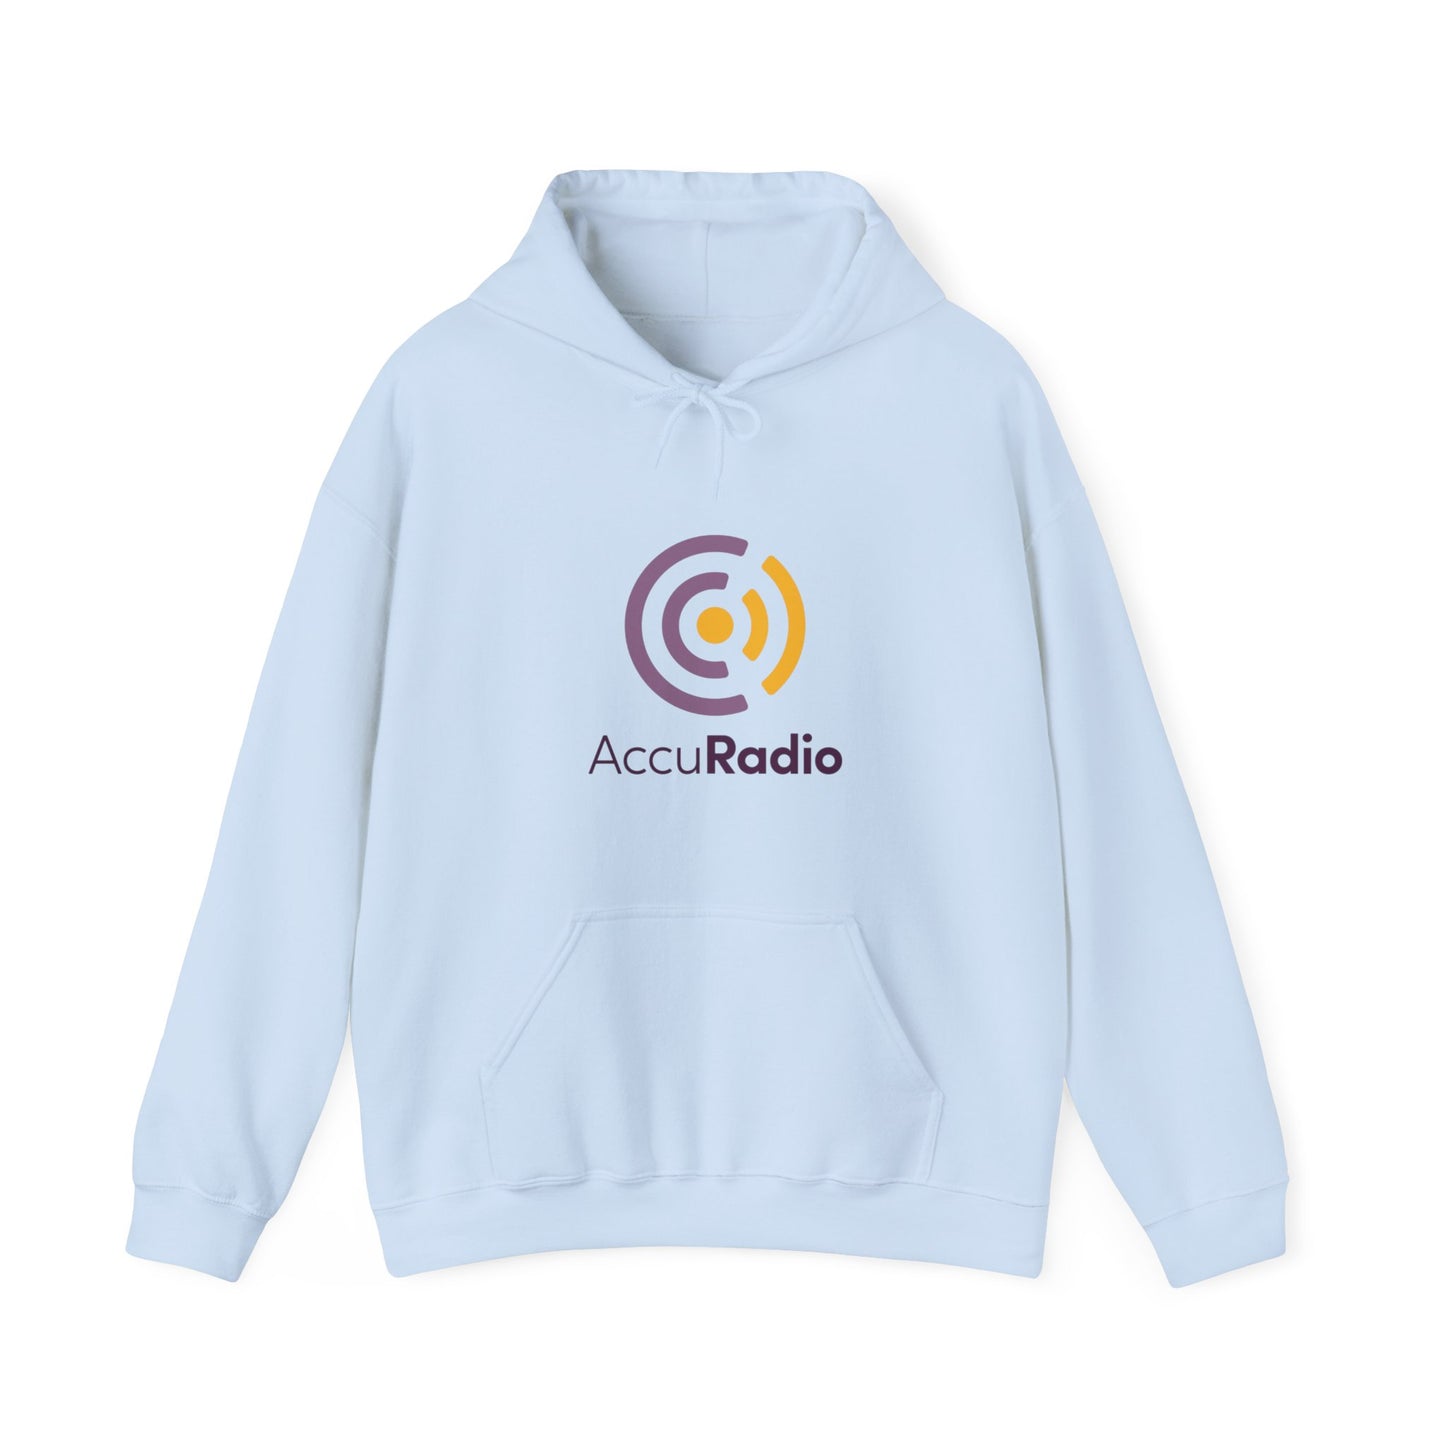 AccuRadio unisex heavy blend sweatshirt